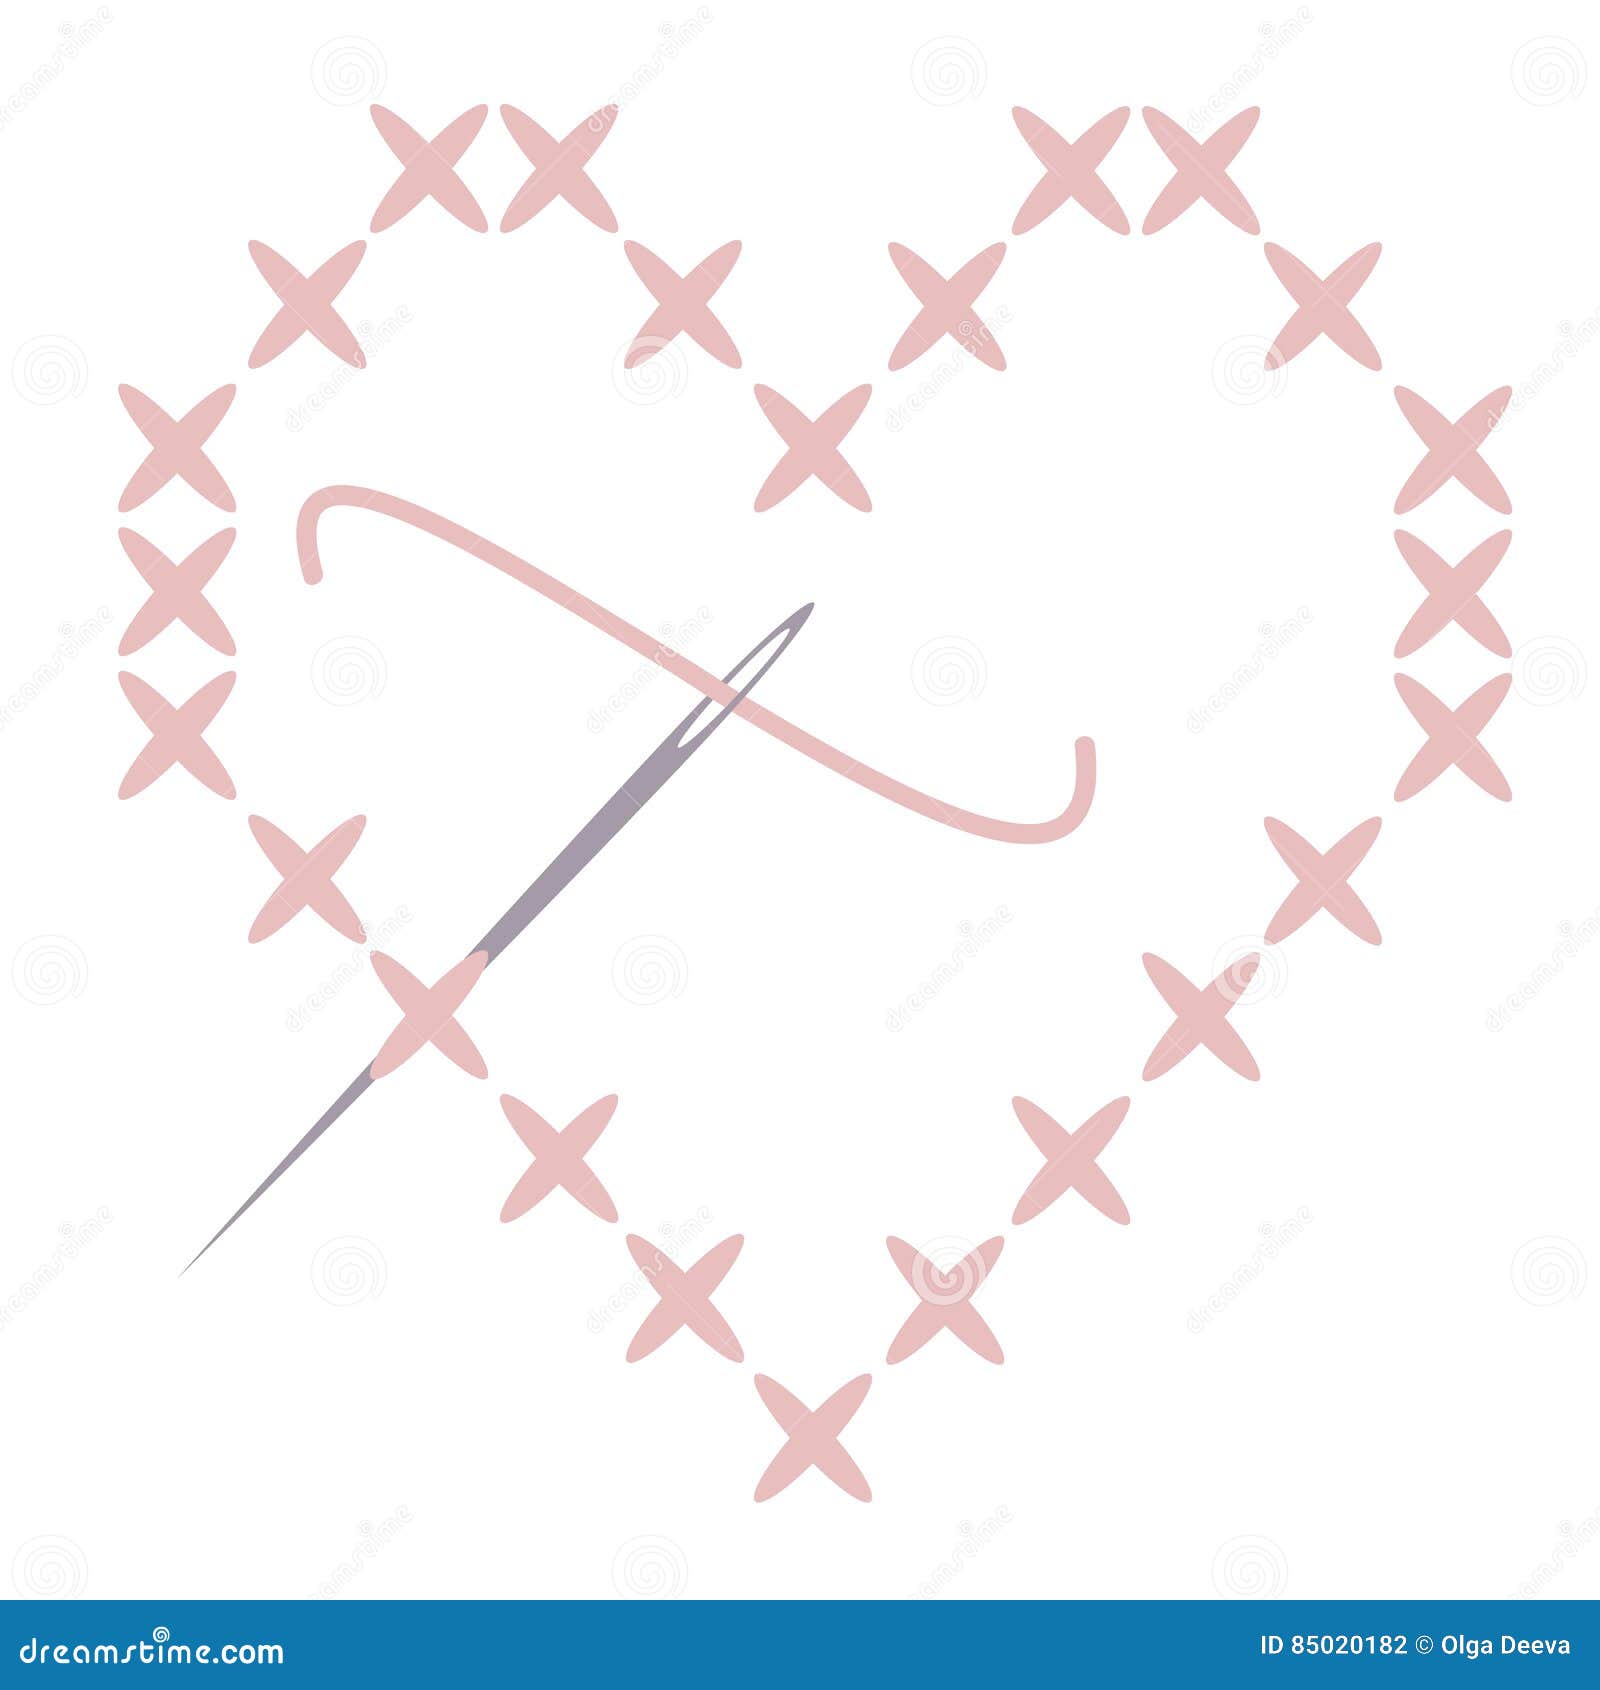 Cross Stitch Heart with Needle Stock Vector - Illustration of needle ...